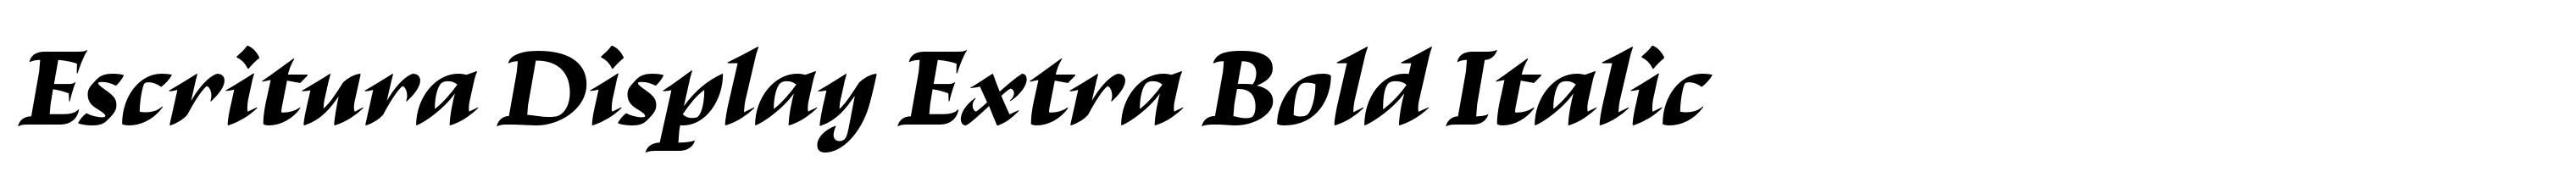 Escritura Display Extra Bold Italic